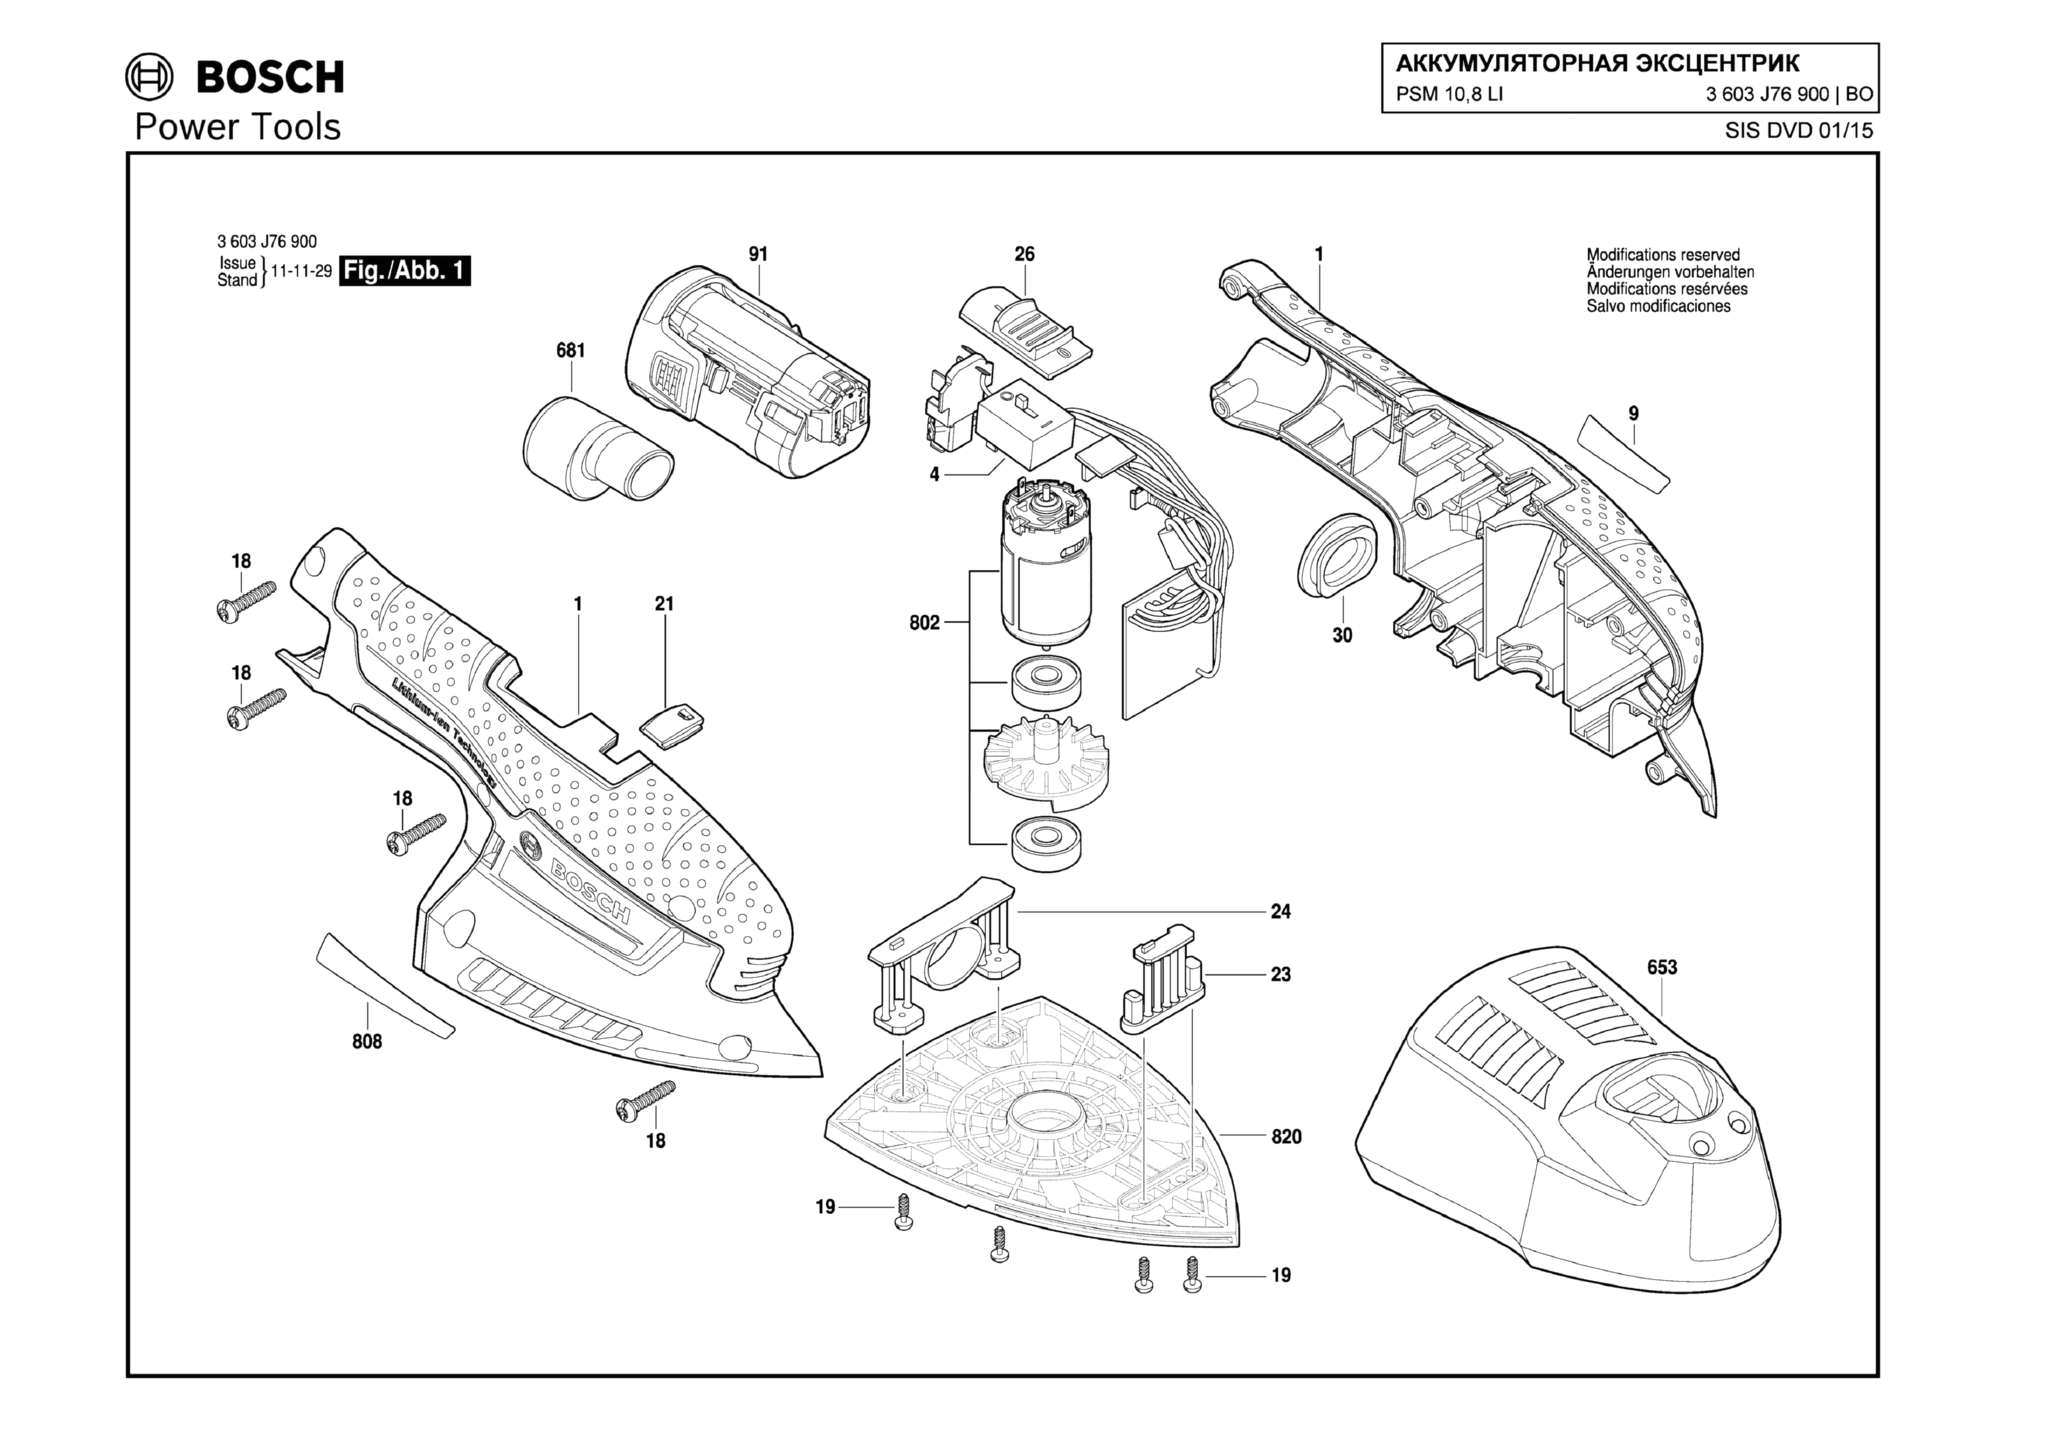 Запчасти, схема и деталировка Bosch PSM 10,8 LI (ТИП 3603J76900)